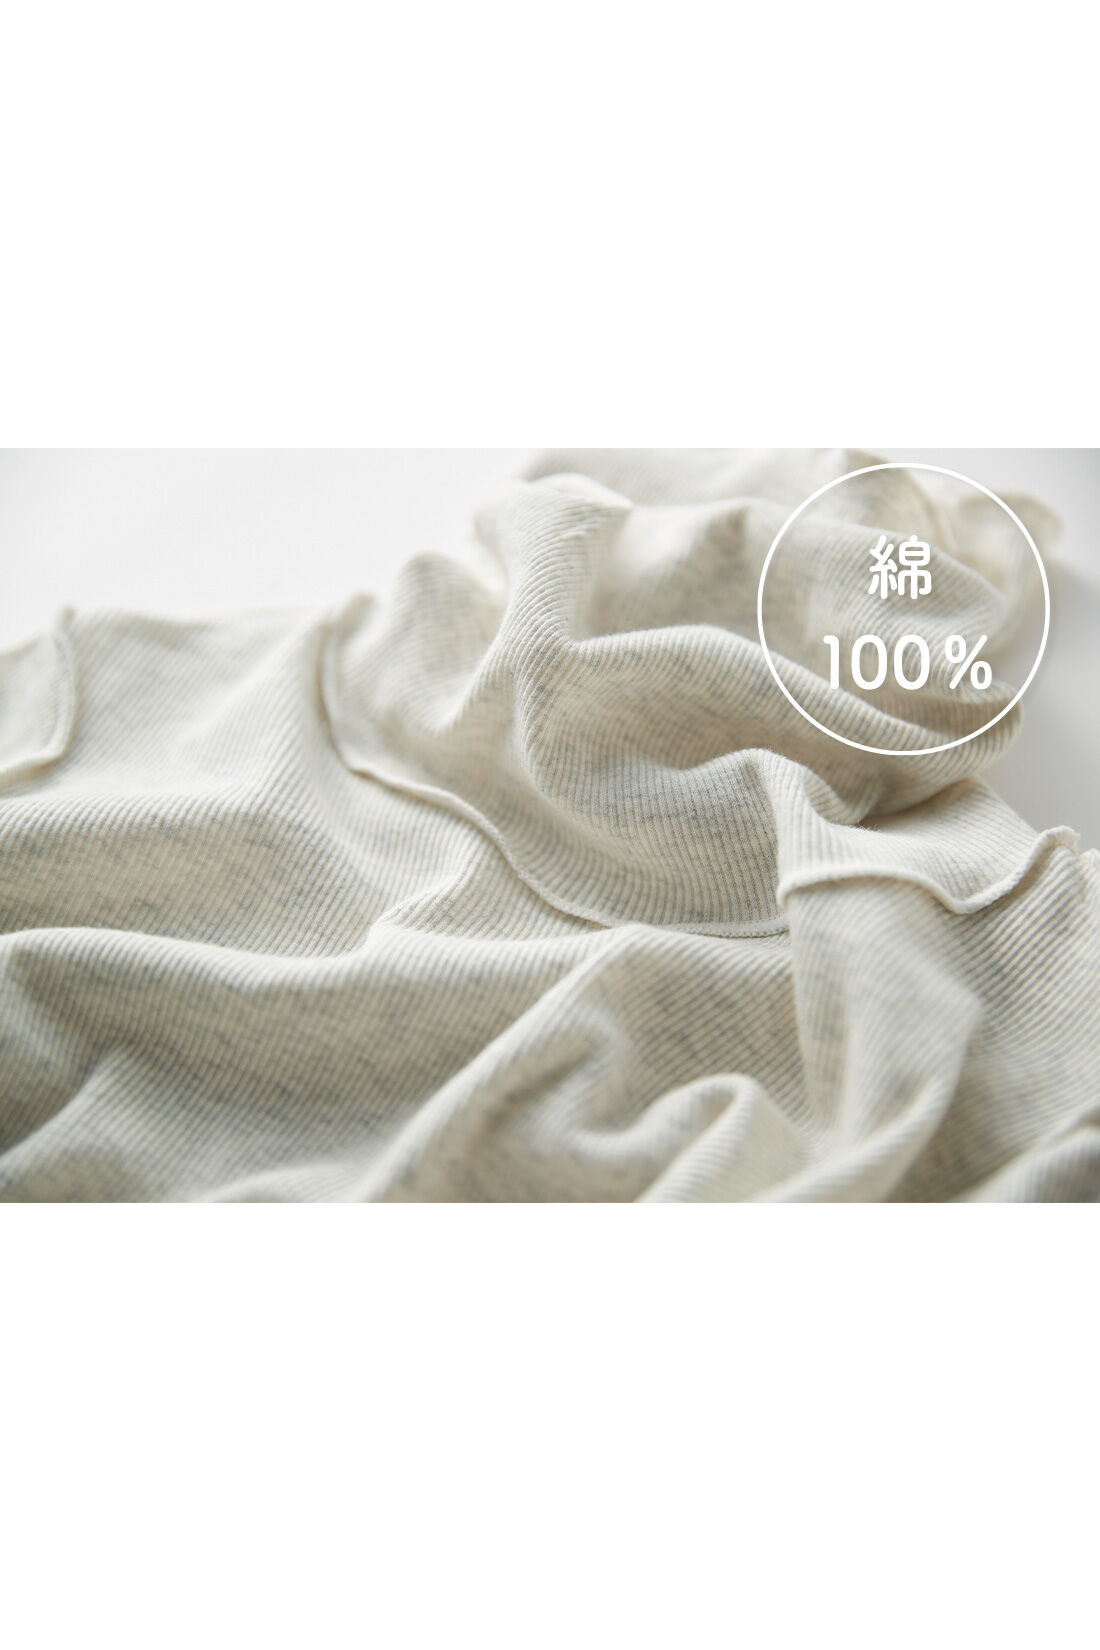 IEDIT|IEDIT[イディット]　綿100％エニワイズ加工の肌心地がやさしい インナーセットの会【パジャマインナー】|なめらかな肌ざわりにうっとり しっとり綿100％ 肌にチクチクしにくいアウトシーム仕様。